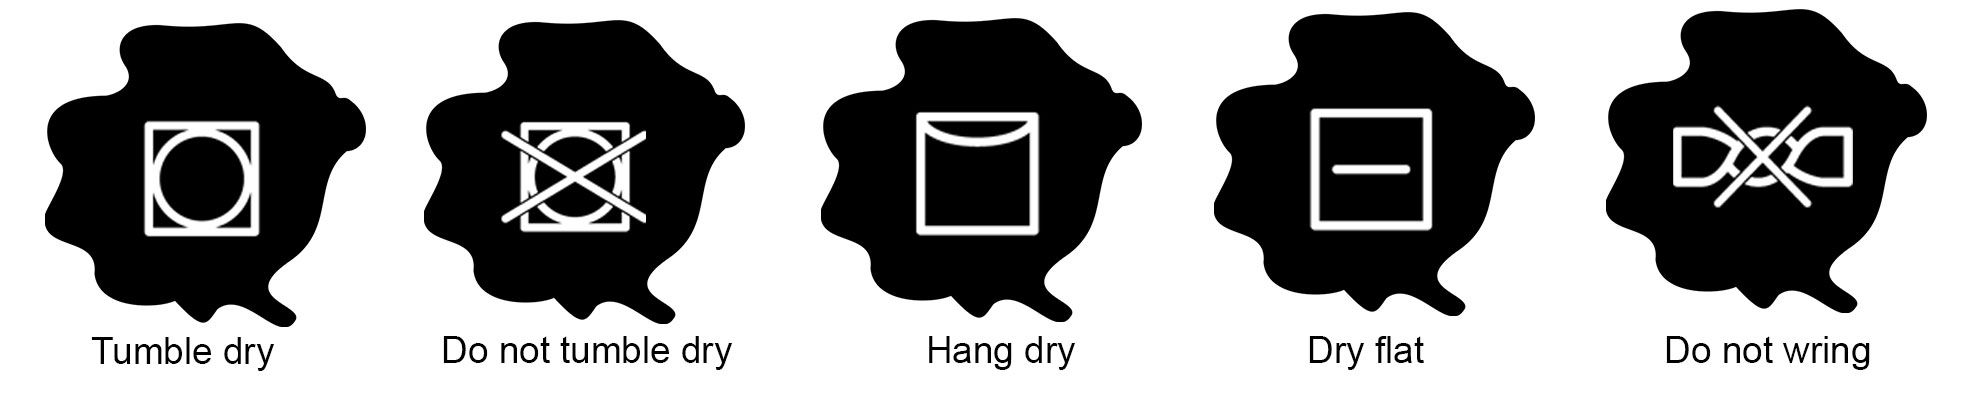 Laundry Symbols Simplified